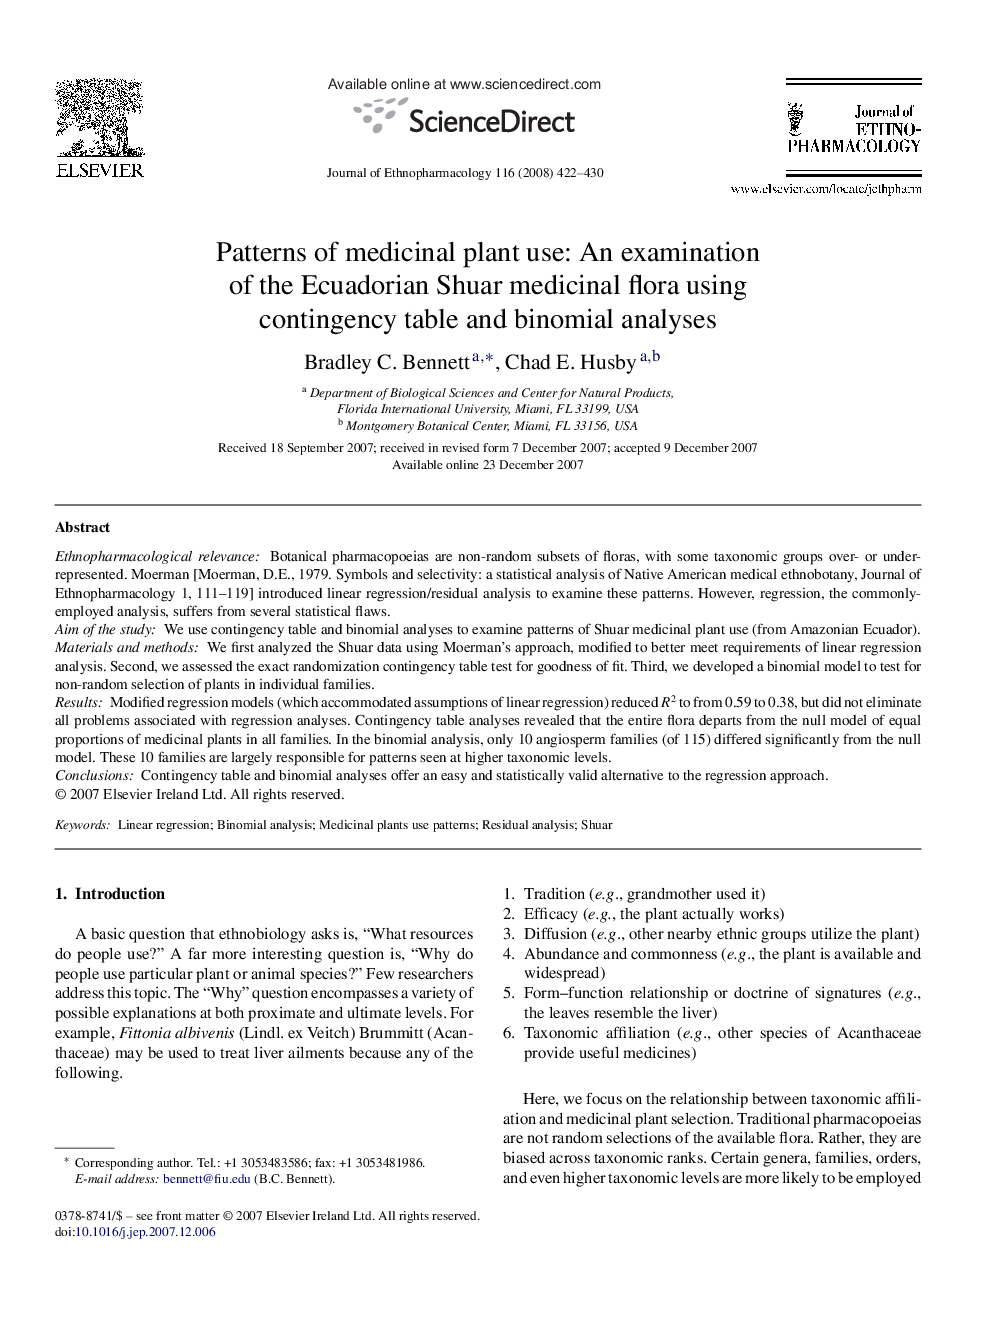 Patterns of medicinal plant use: An examination of the Ecuadorian Shuar medicinal flora using contingency table and binomial analyses